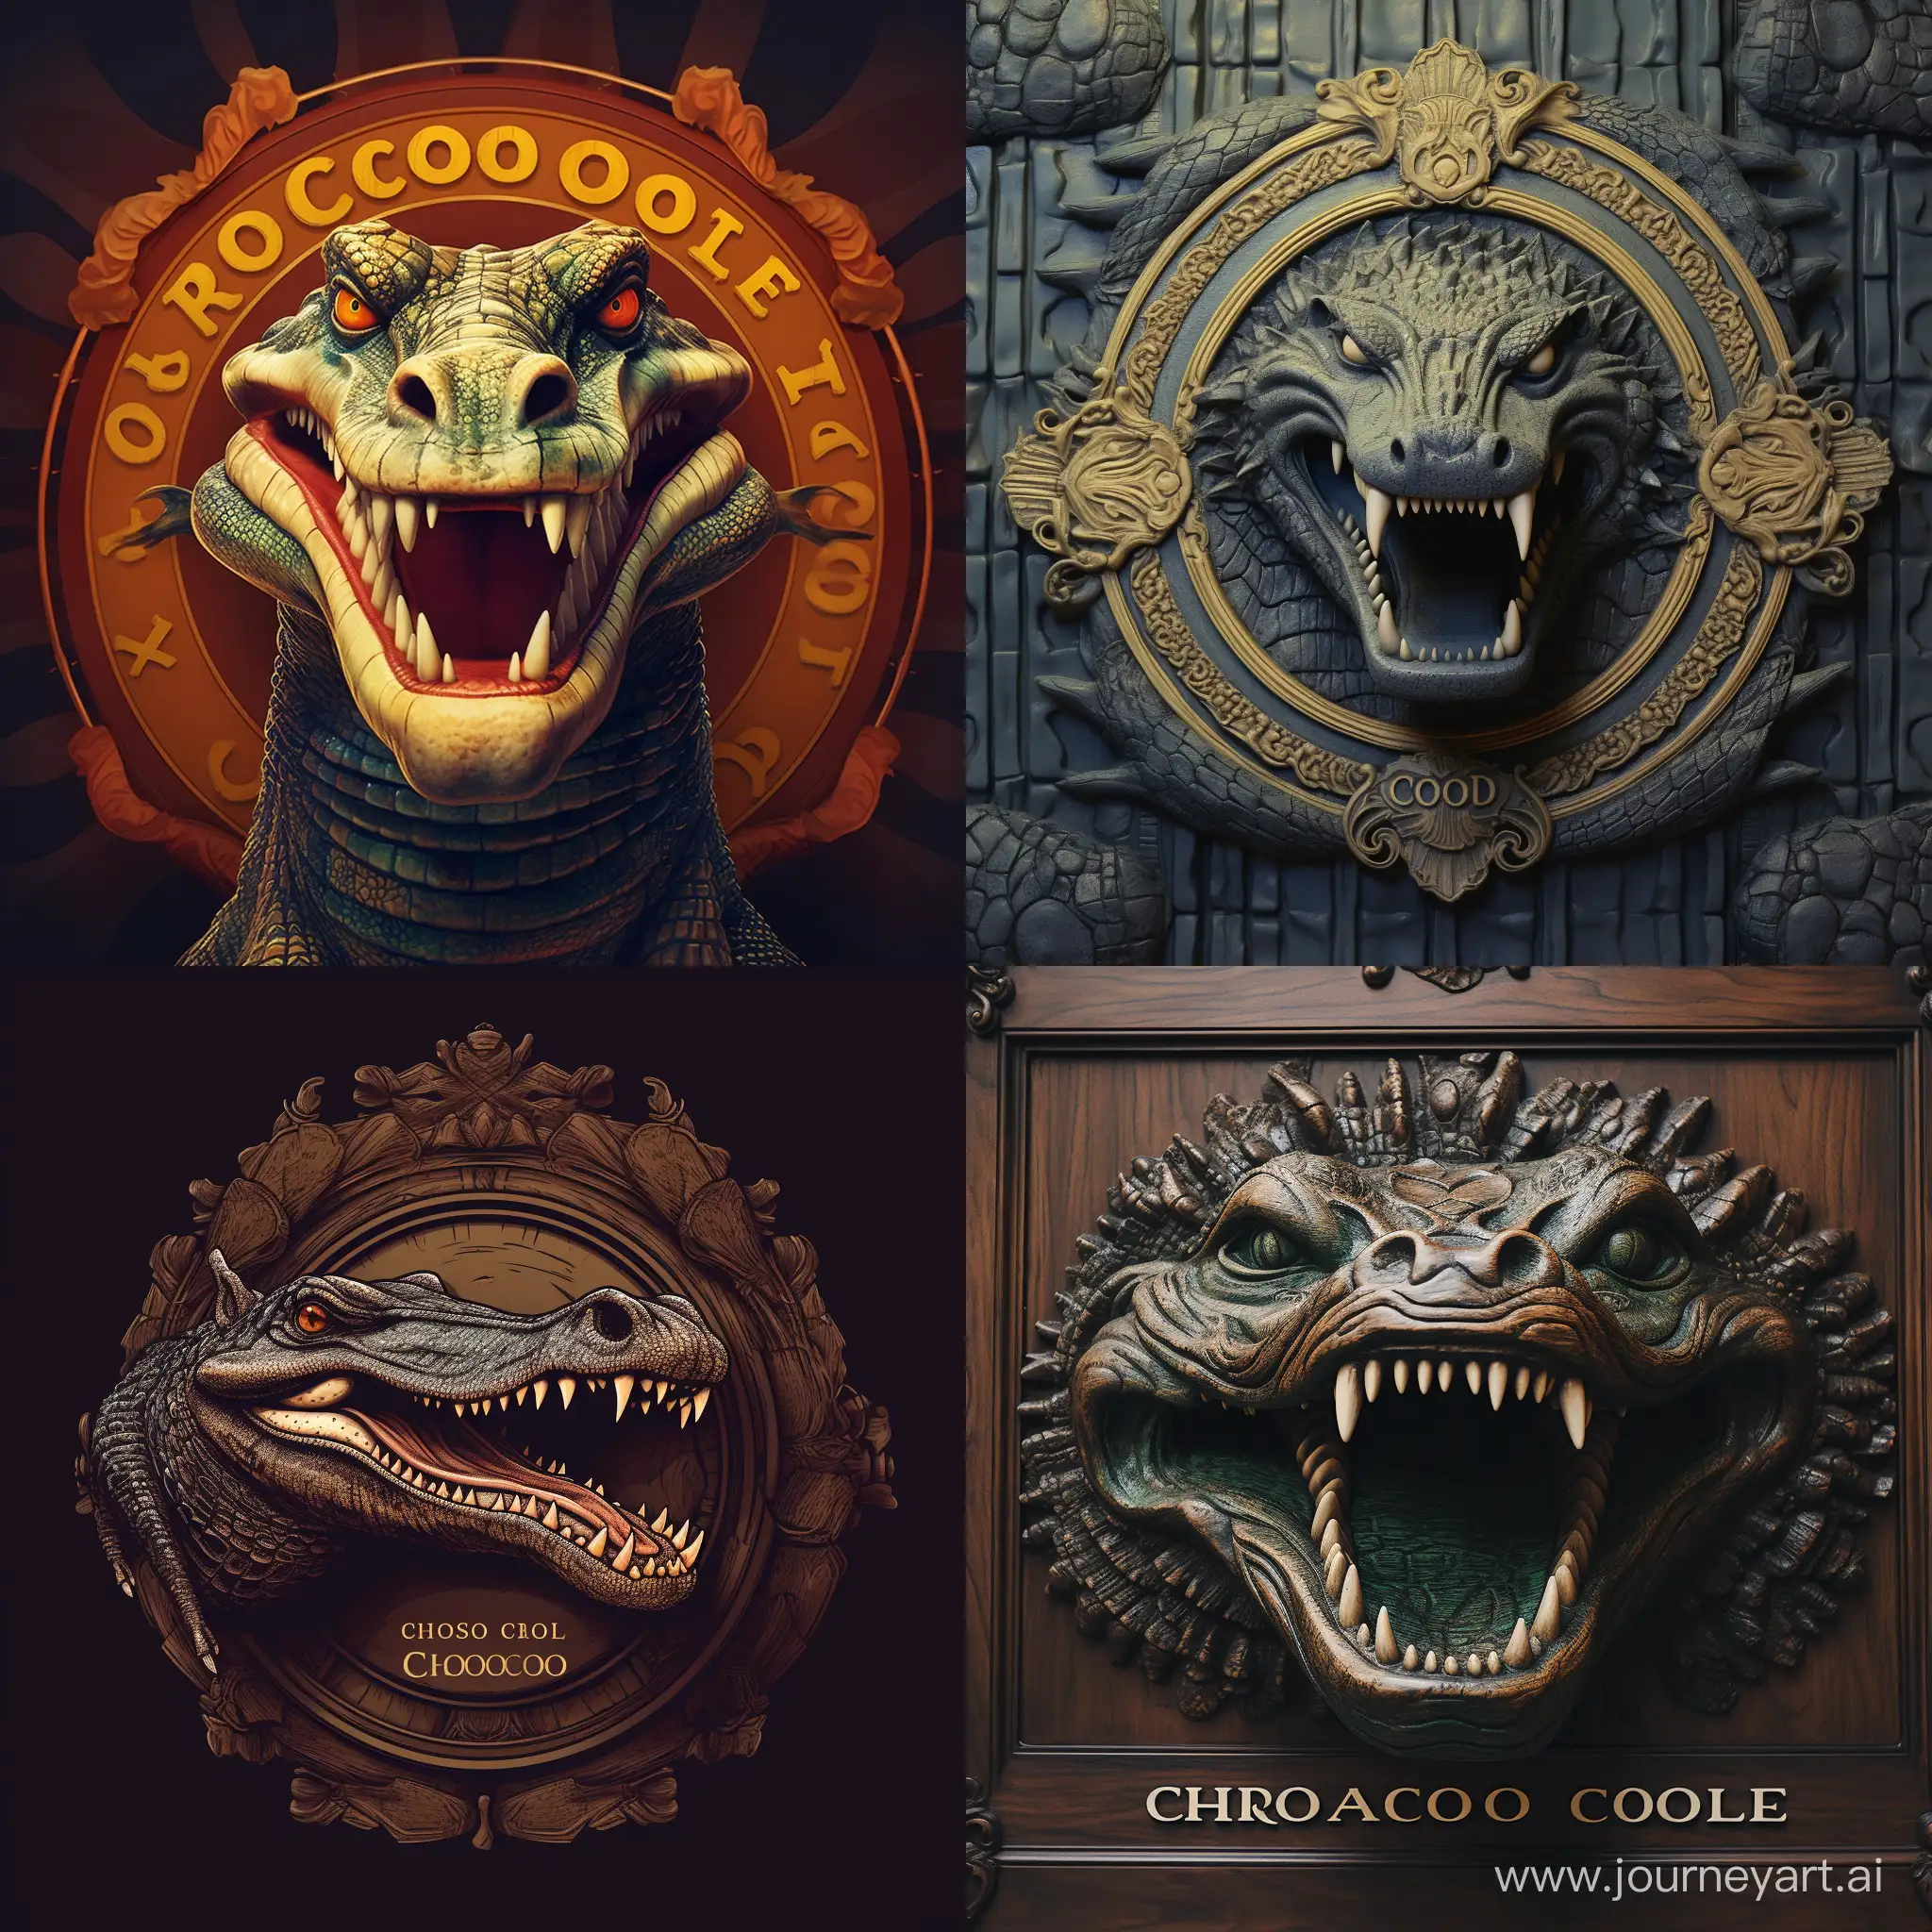 Logo, crocodile close-up, inscription "croco house"